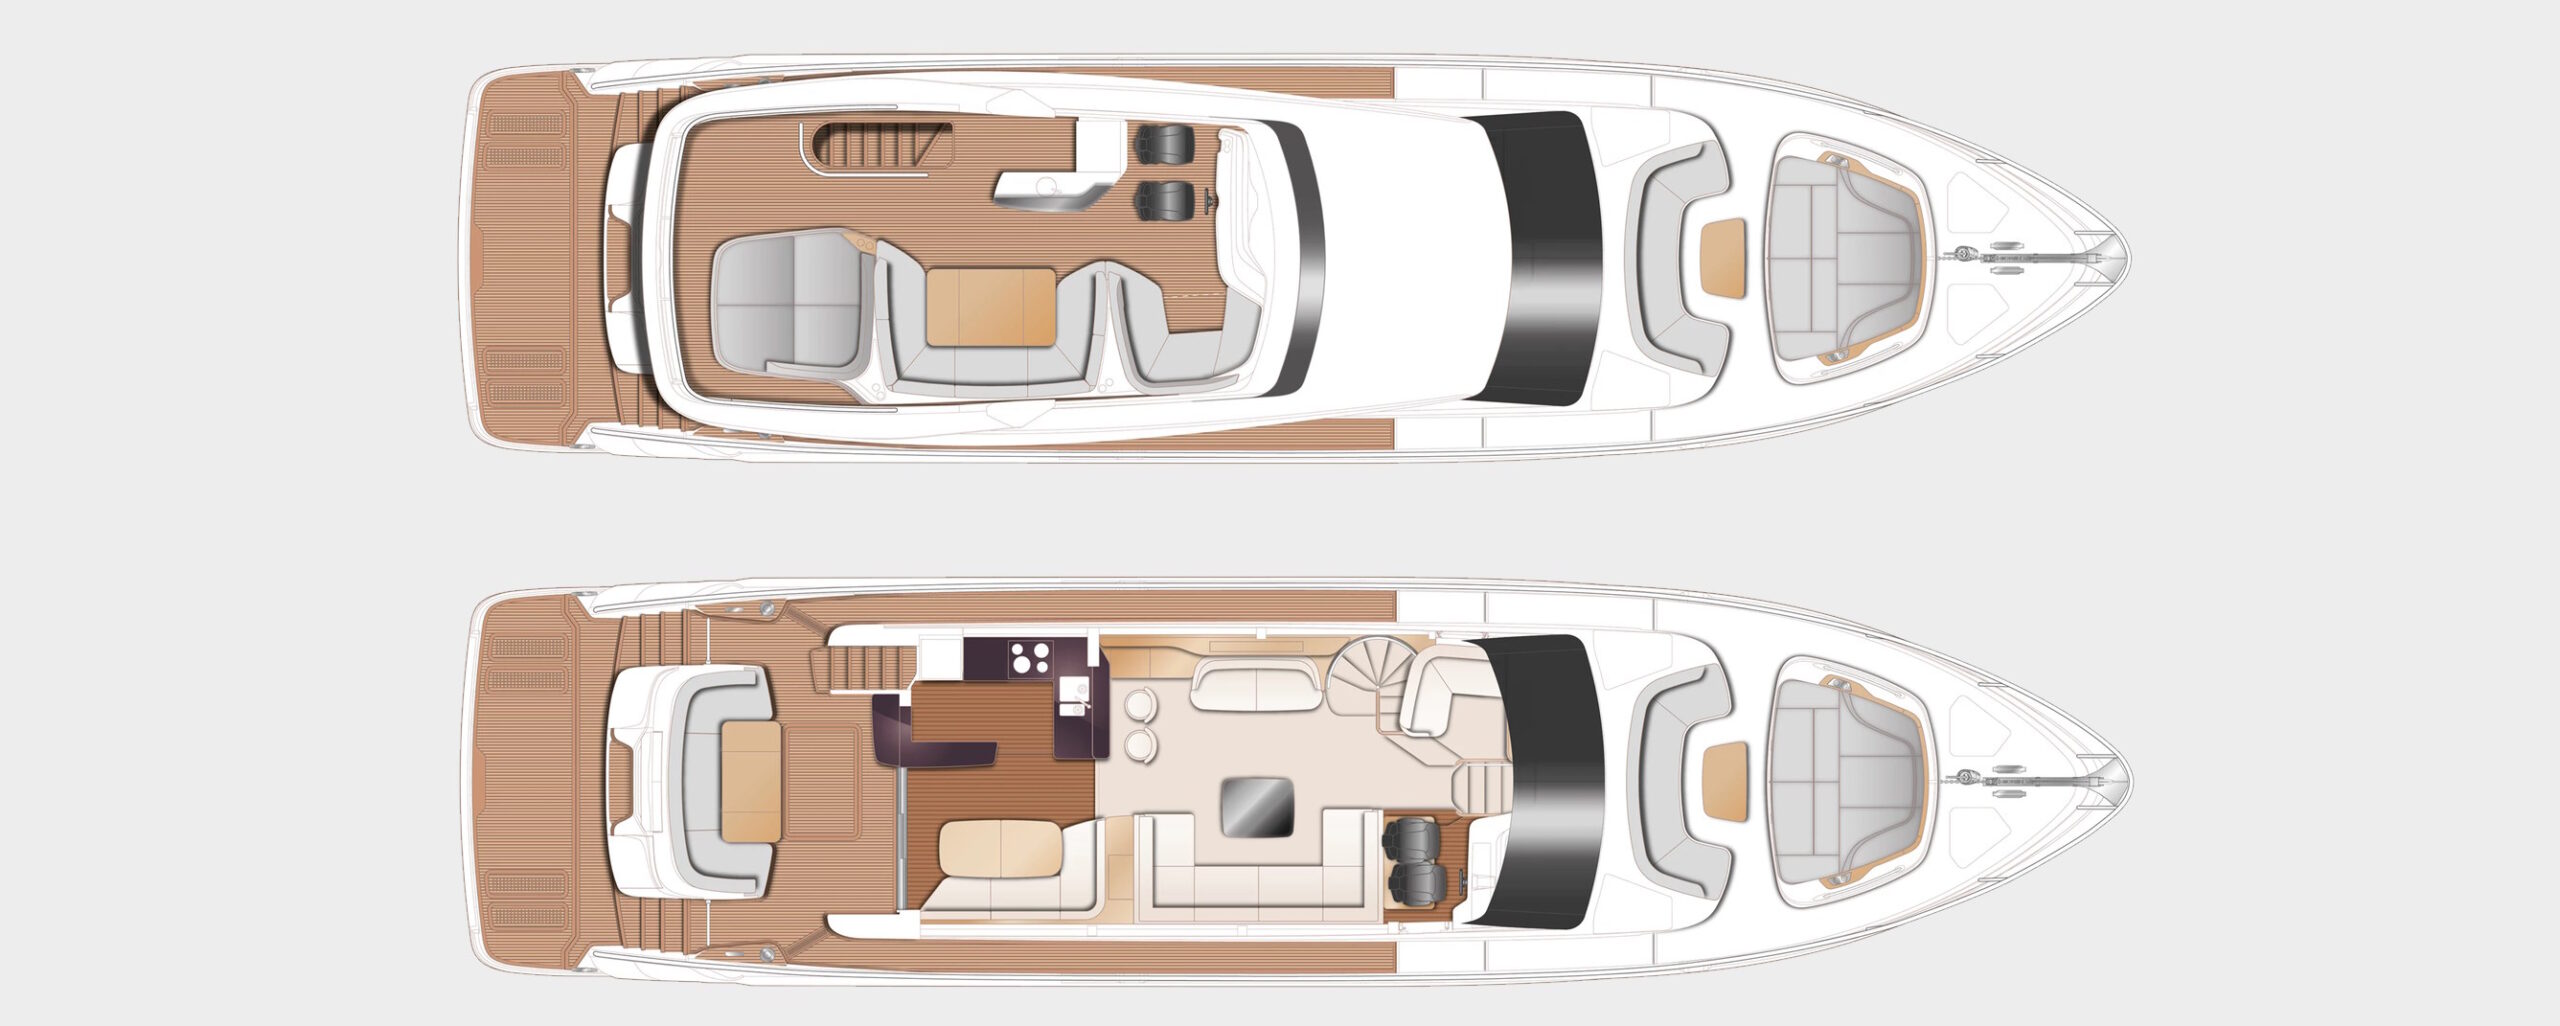 elizabeth yacht charter layout